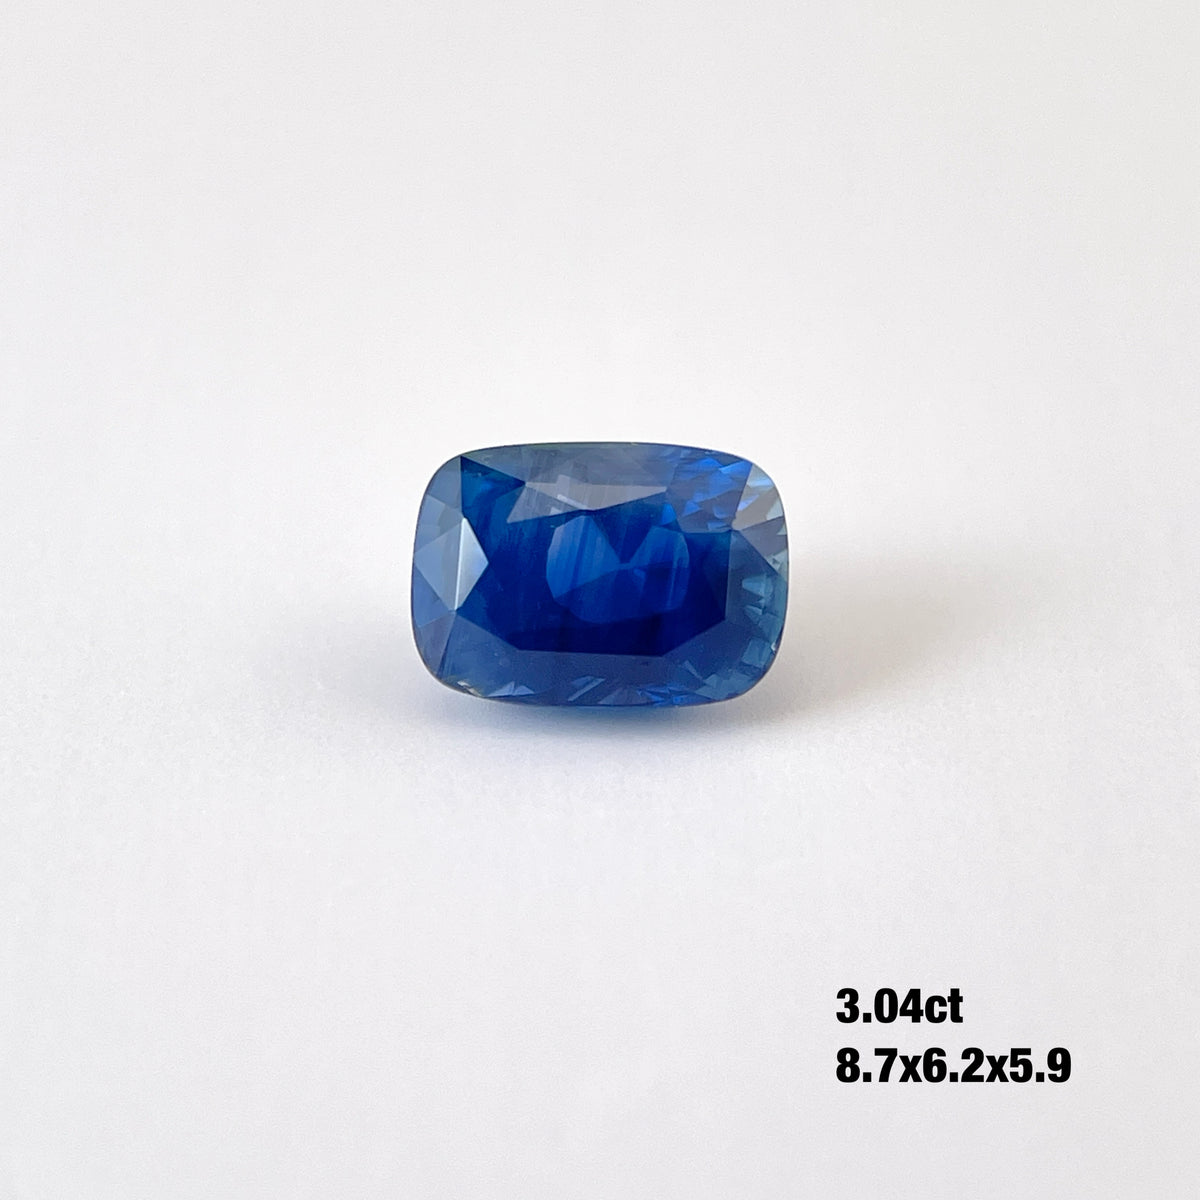 3 Carat Cushion Vivid Blue Sapphire Gemstone CGL Certified 005